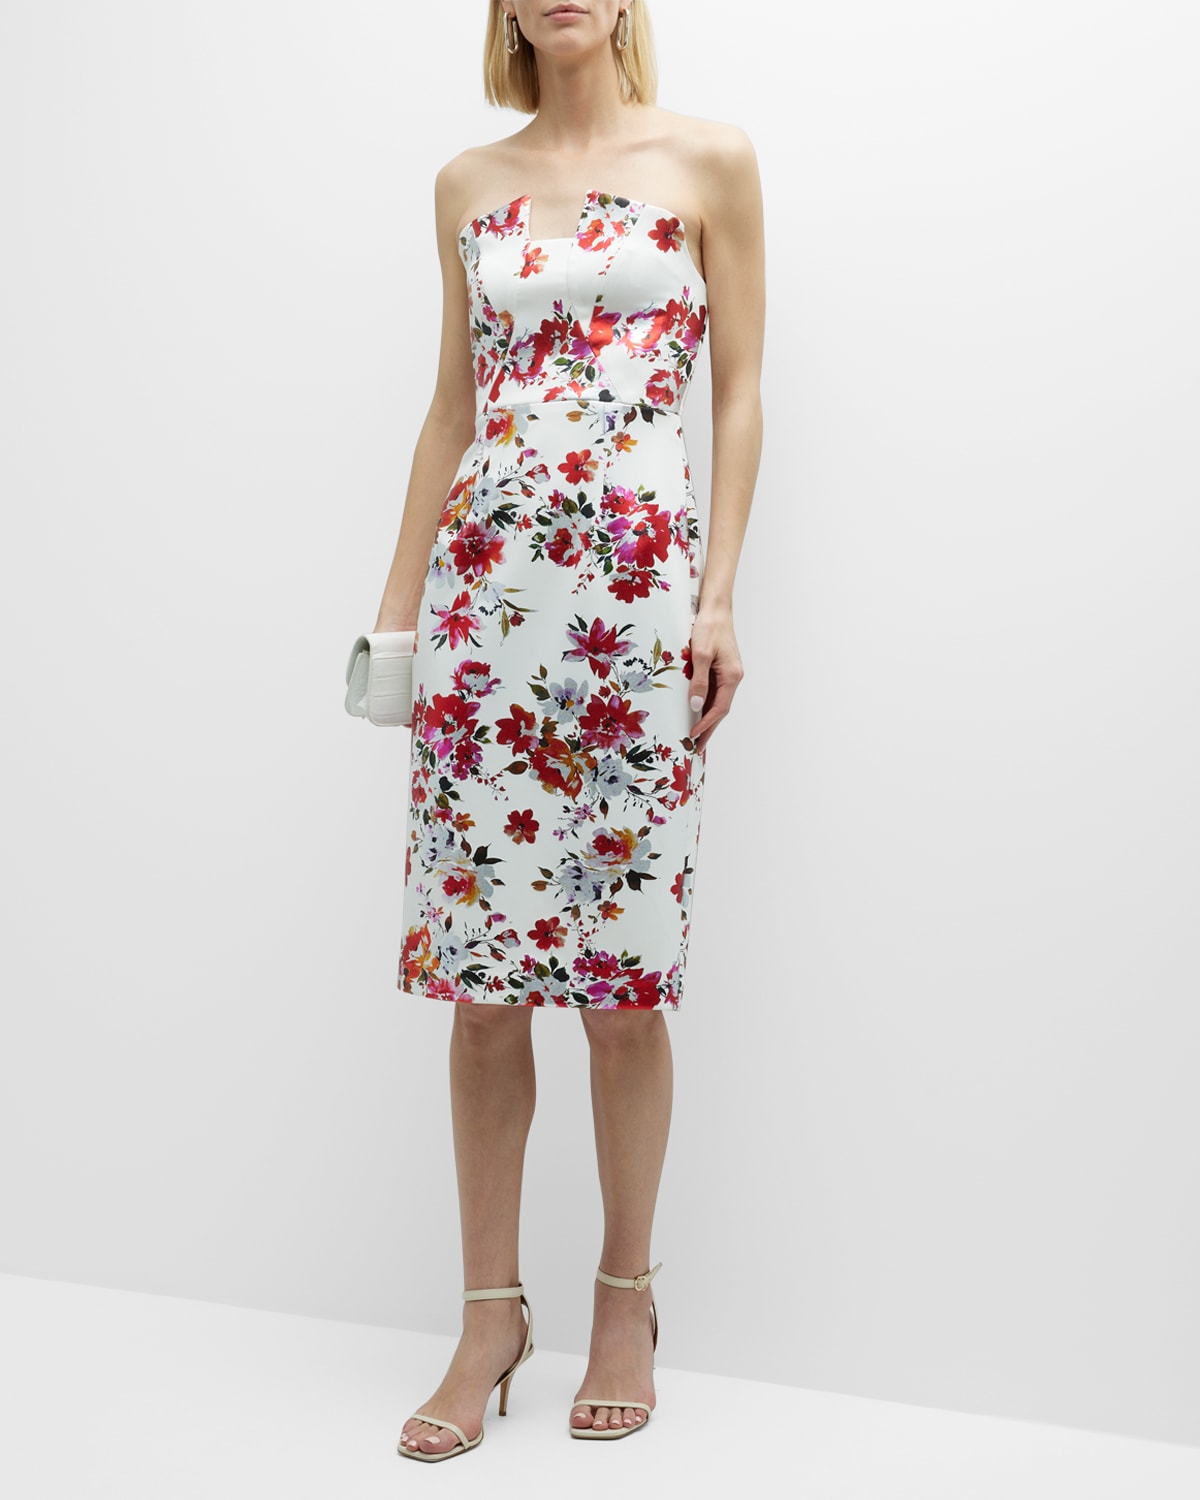 Strapless Floral-Print Bodycon Cocktail Dress